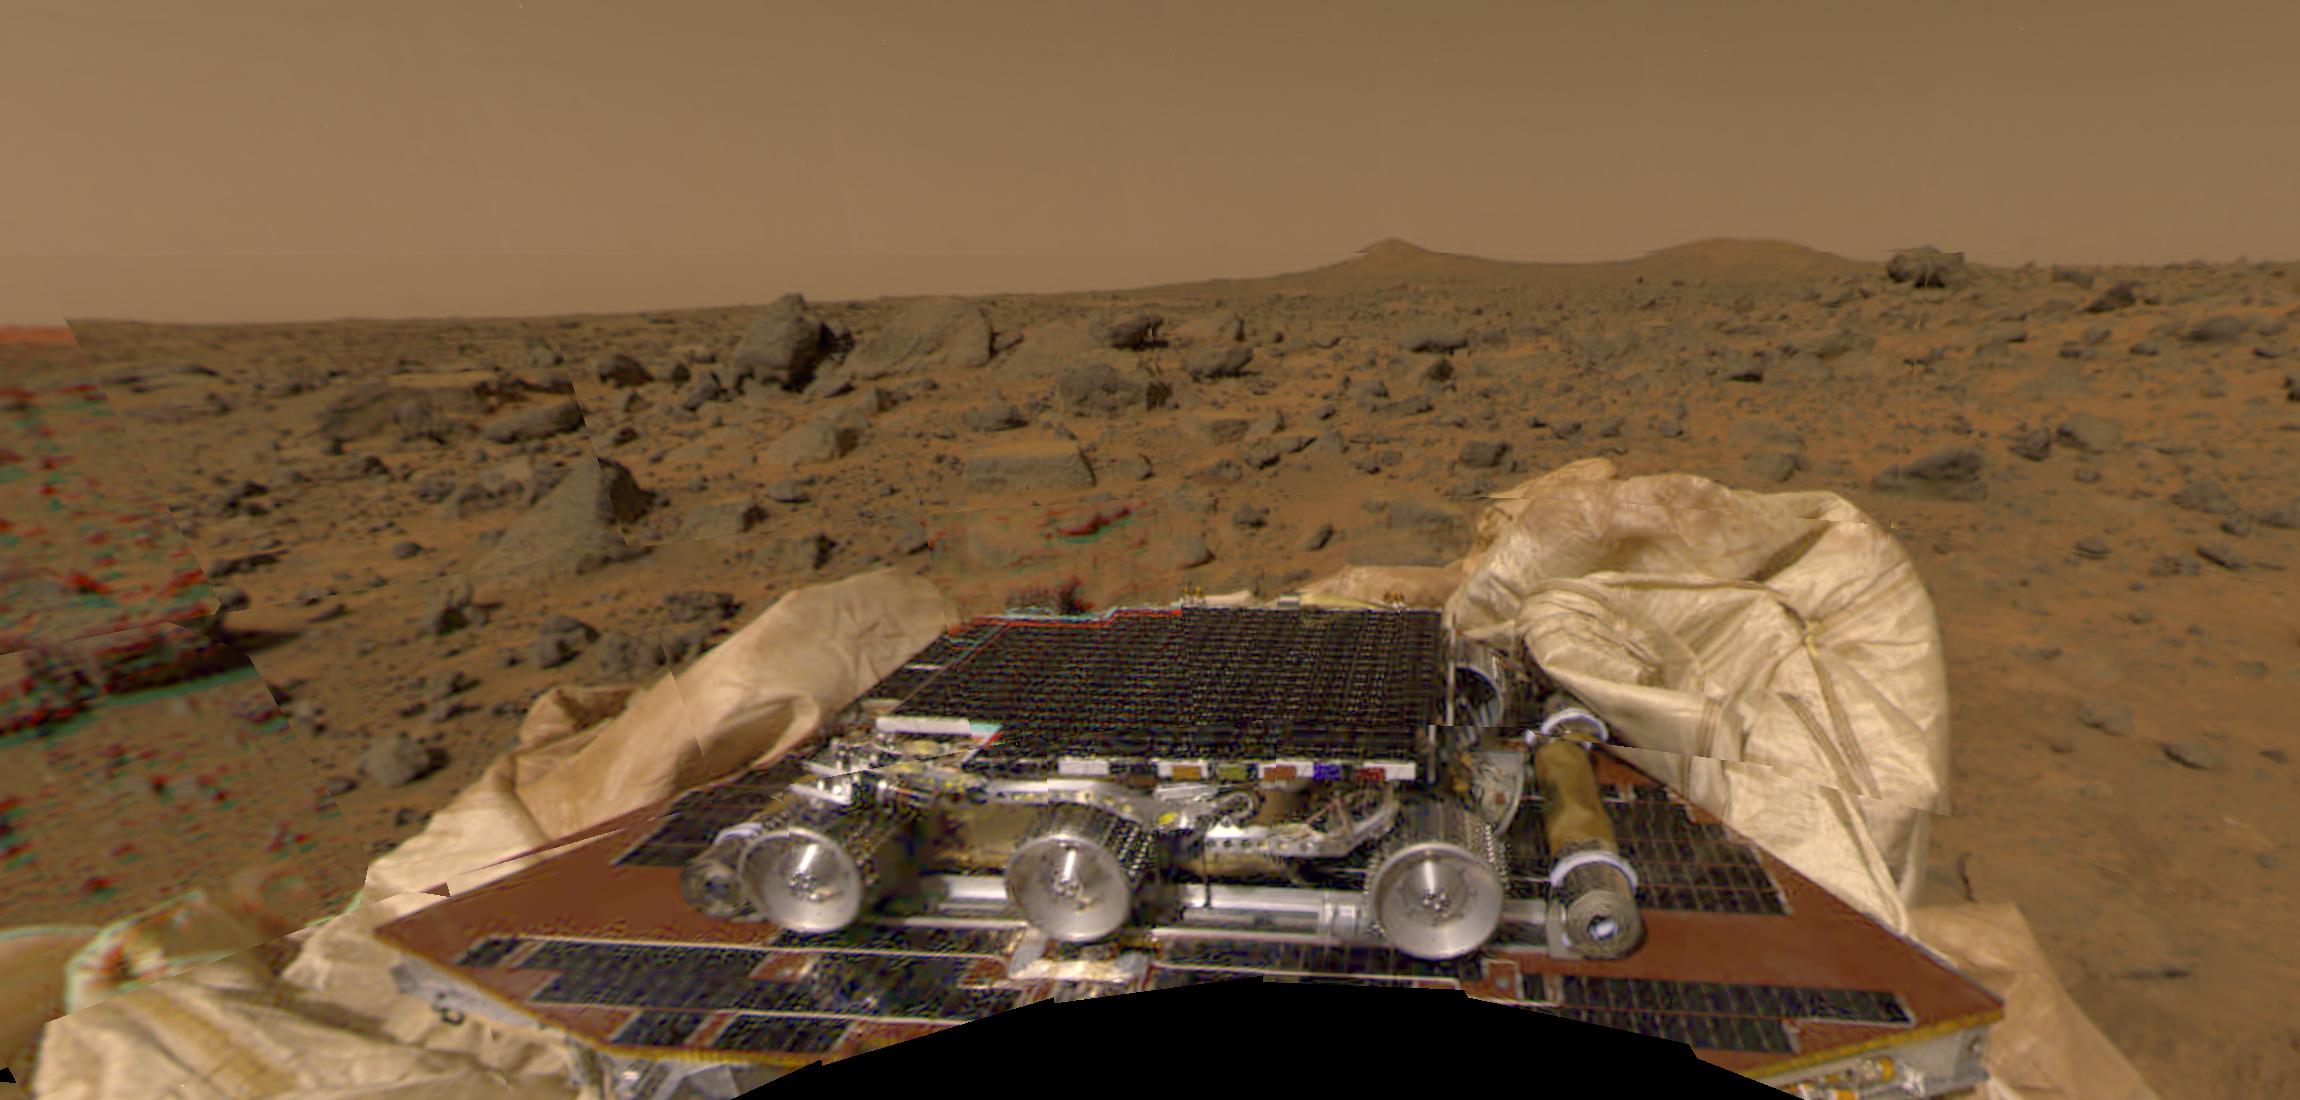 1997 Pathfinder lands on Mars, sending back astonishing photos